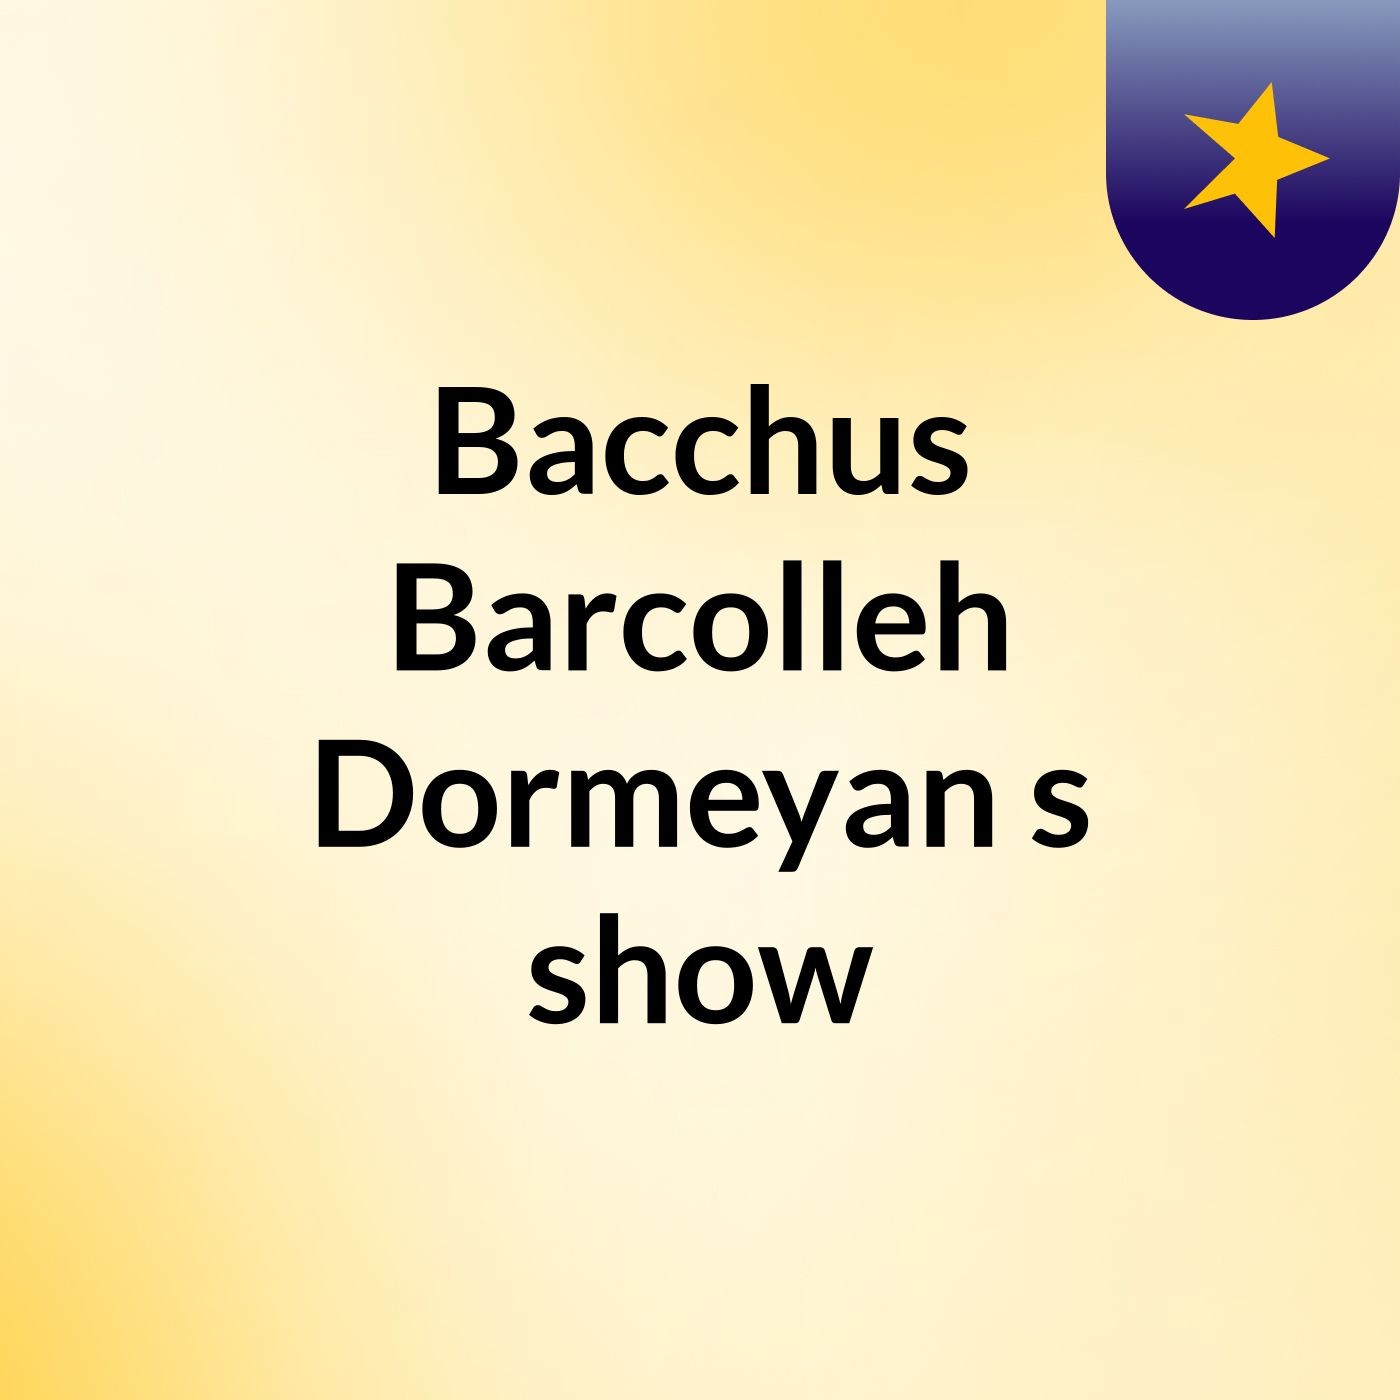 Bacchus Barcolleh Dormeyan's show